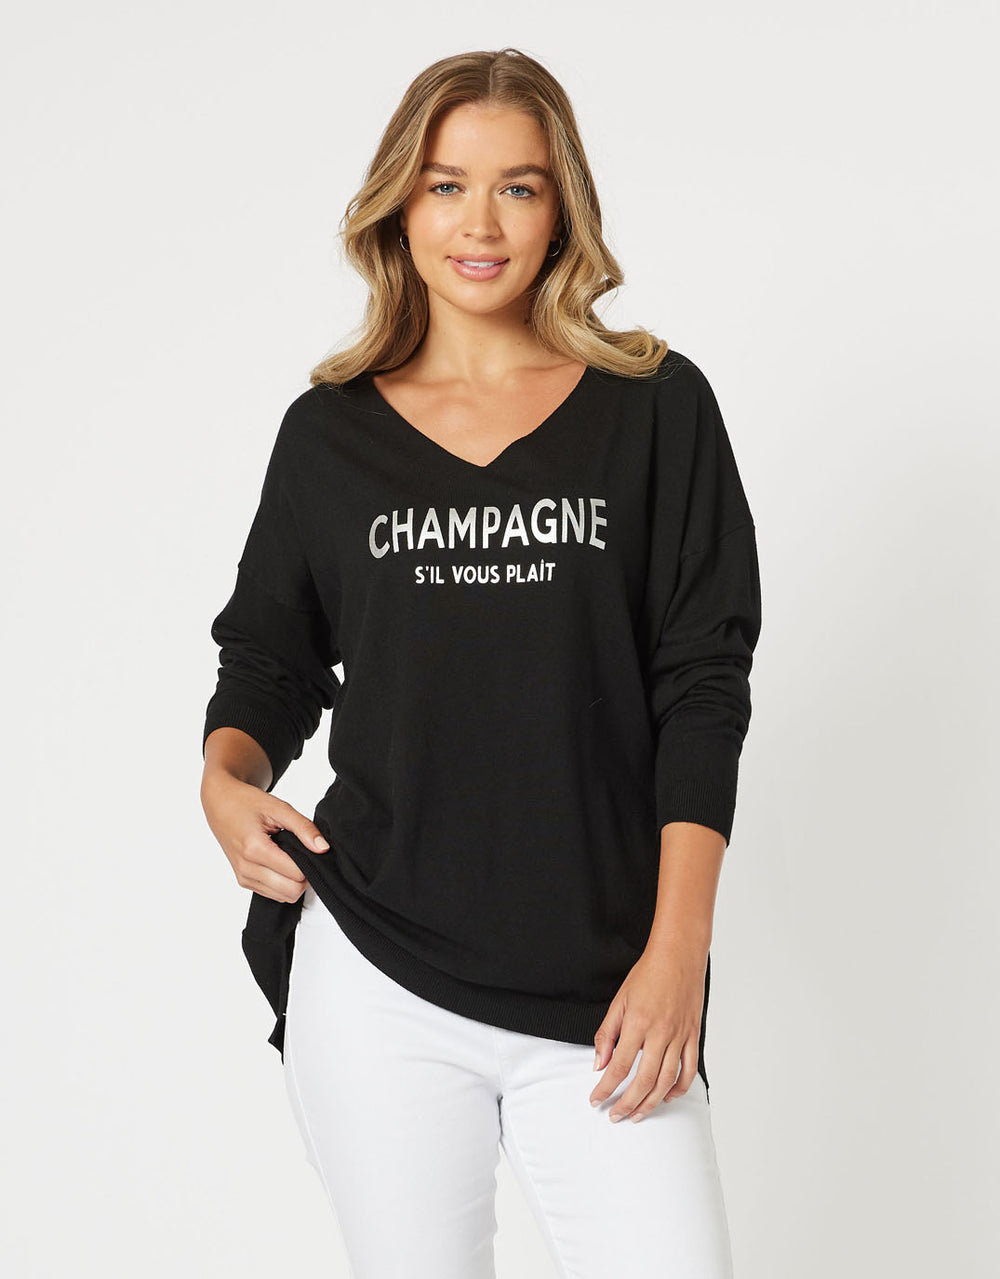 threadz-champagne-knit-black-womens-clothing